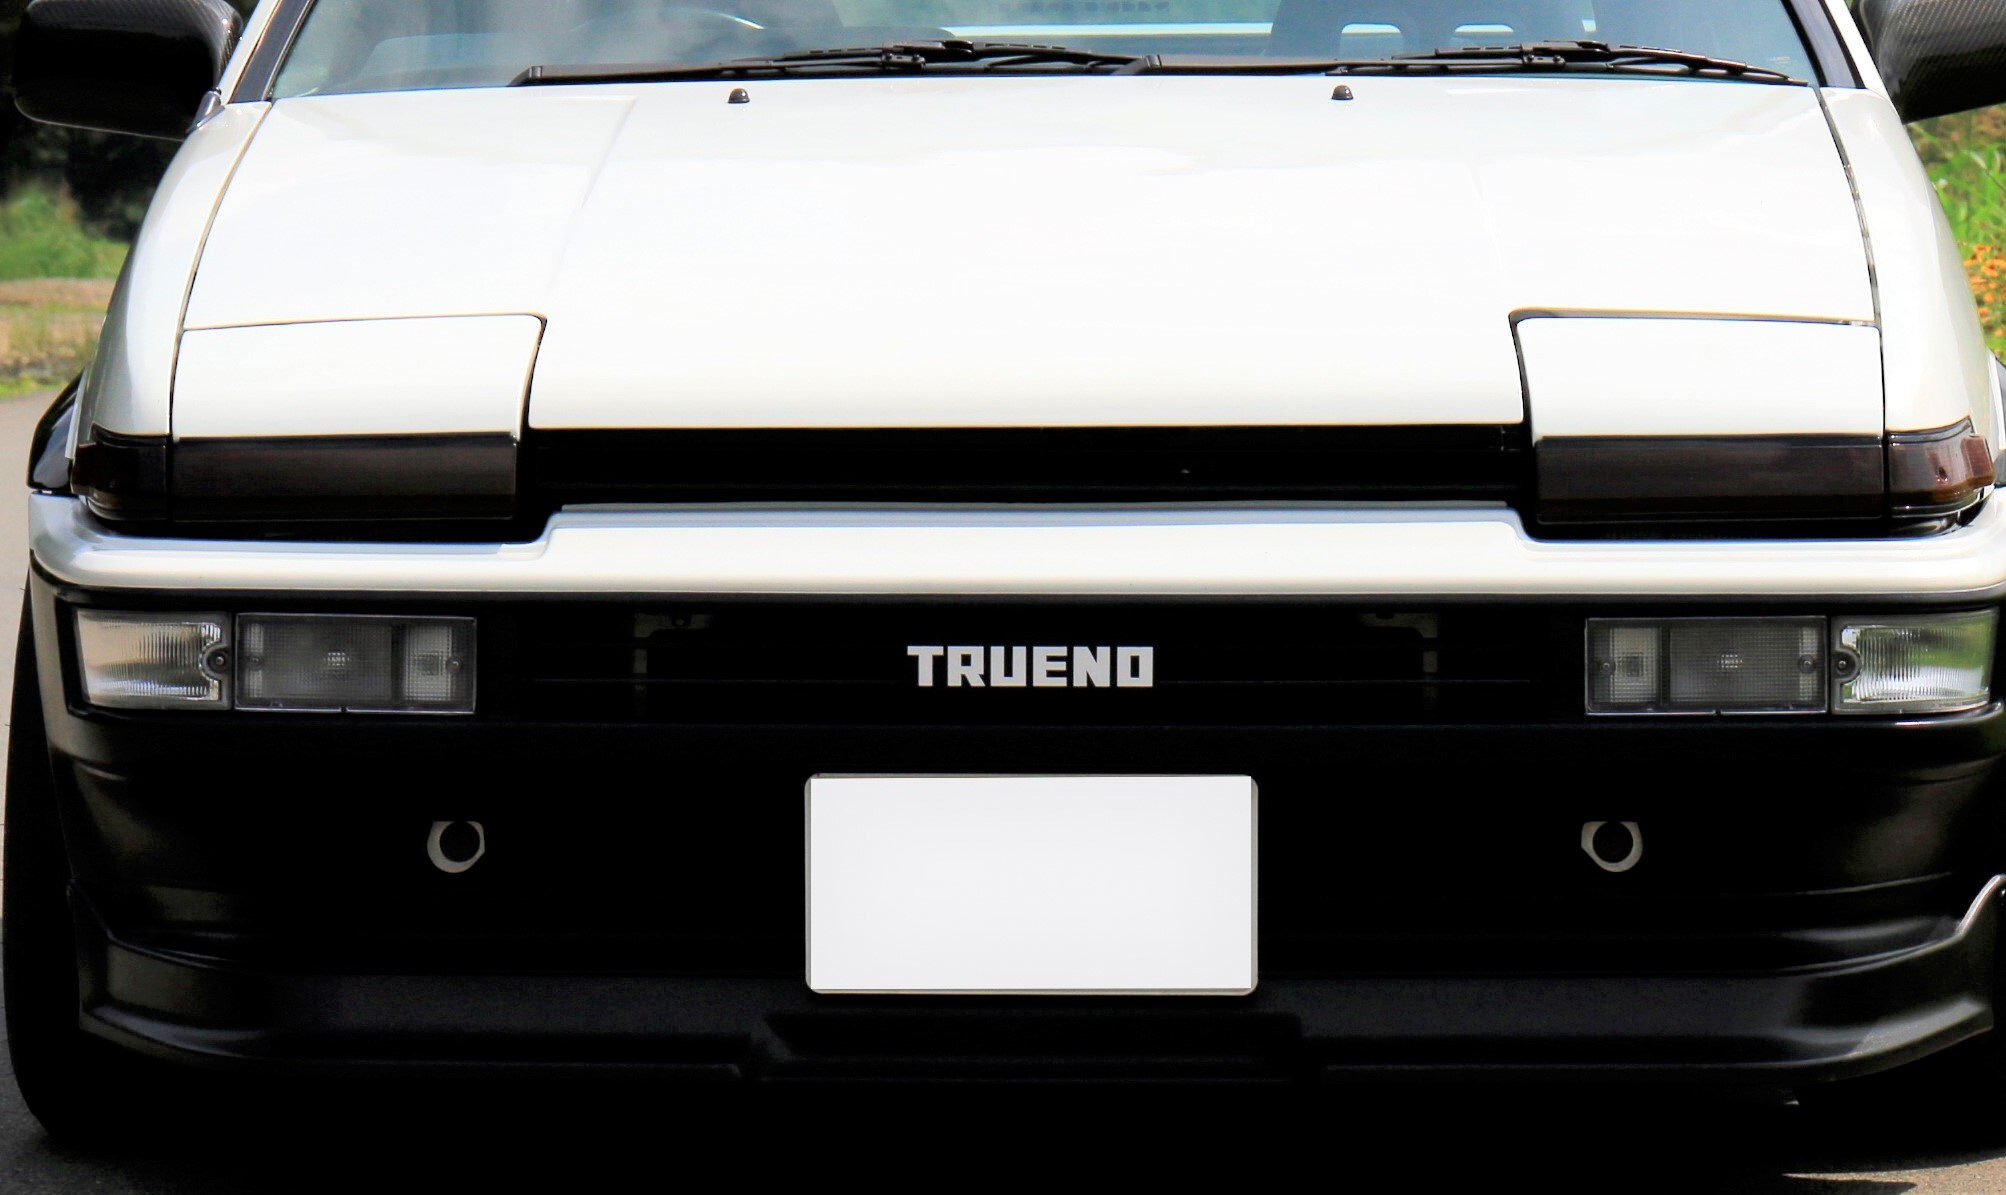 Ae86トレノを18歳で購入し11年 最初のクルマが アガリ になるまで惚れ込んだ理由とは Bestcar Classic オーナーズボイスvol 8 ベストカーweb 自動車情報サイト 新車 中古車 Carview